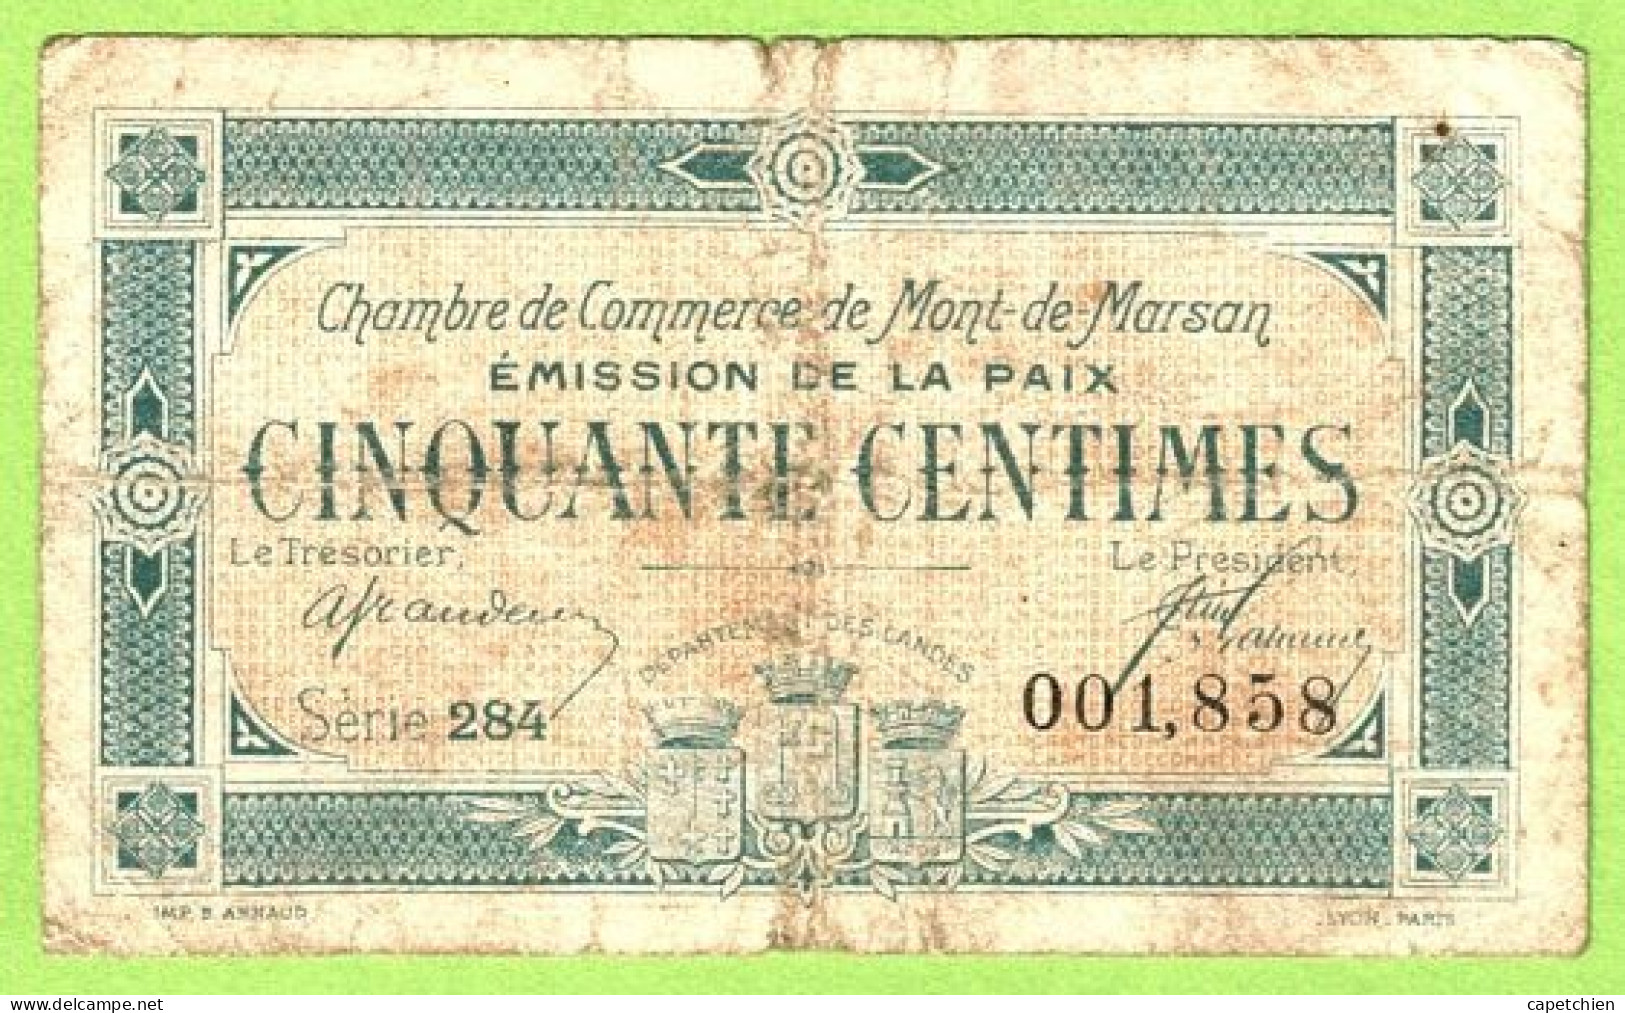 FRANCE / CHAMBRE De COMMERCE / MONT DE MARSAN / 50 CENTIMES / 1921 / EMISSION DE LA PAIX 001858 / SERIE 284 - Camera Di Commercio